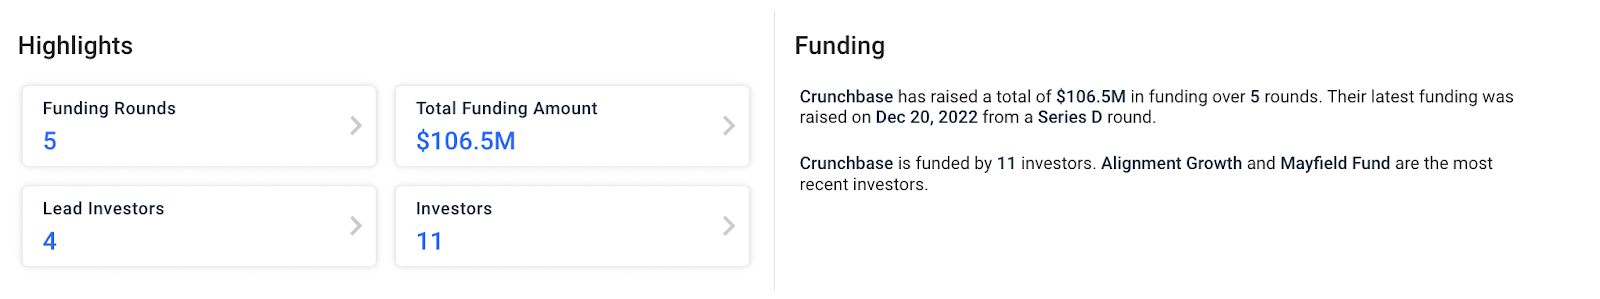 Linguee - Crunchbase Company Profile & Funding